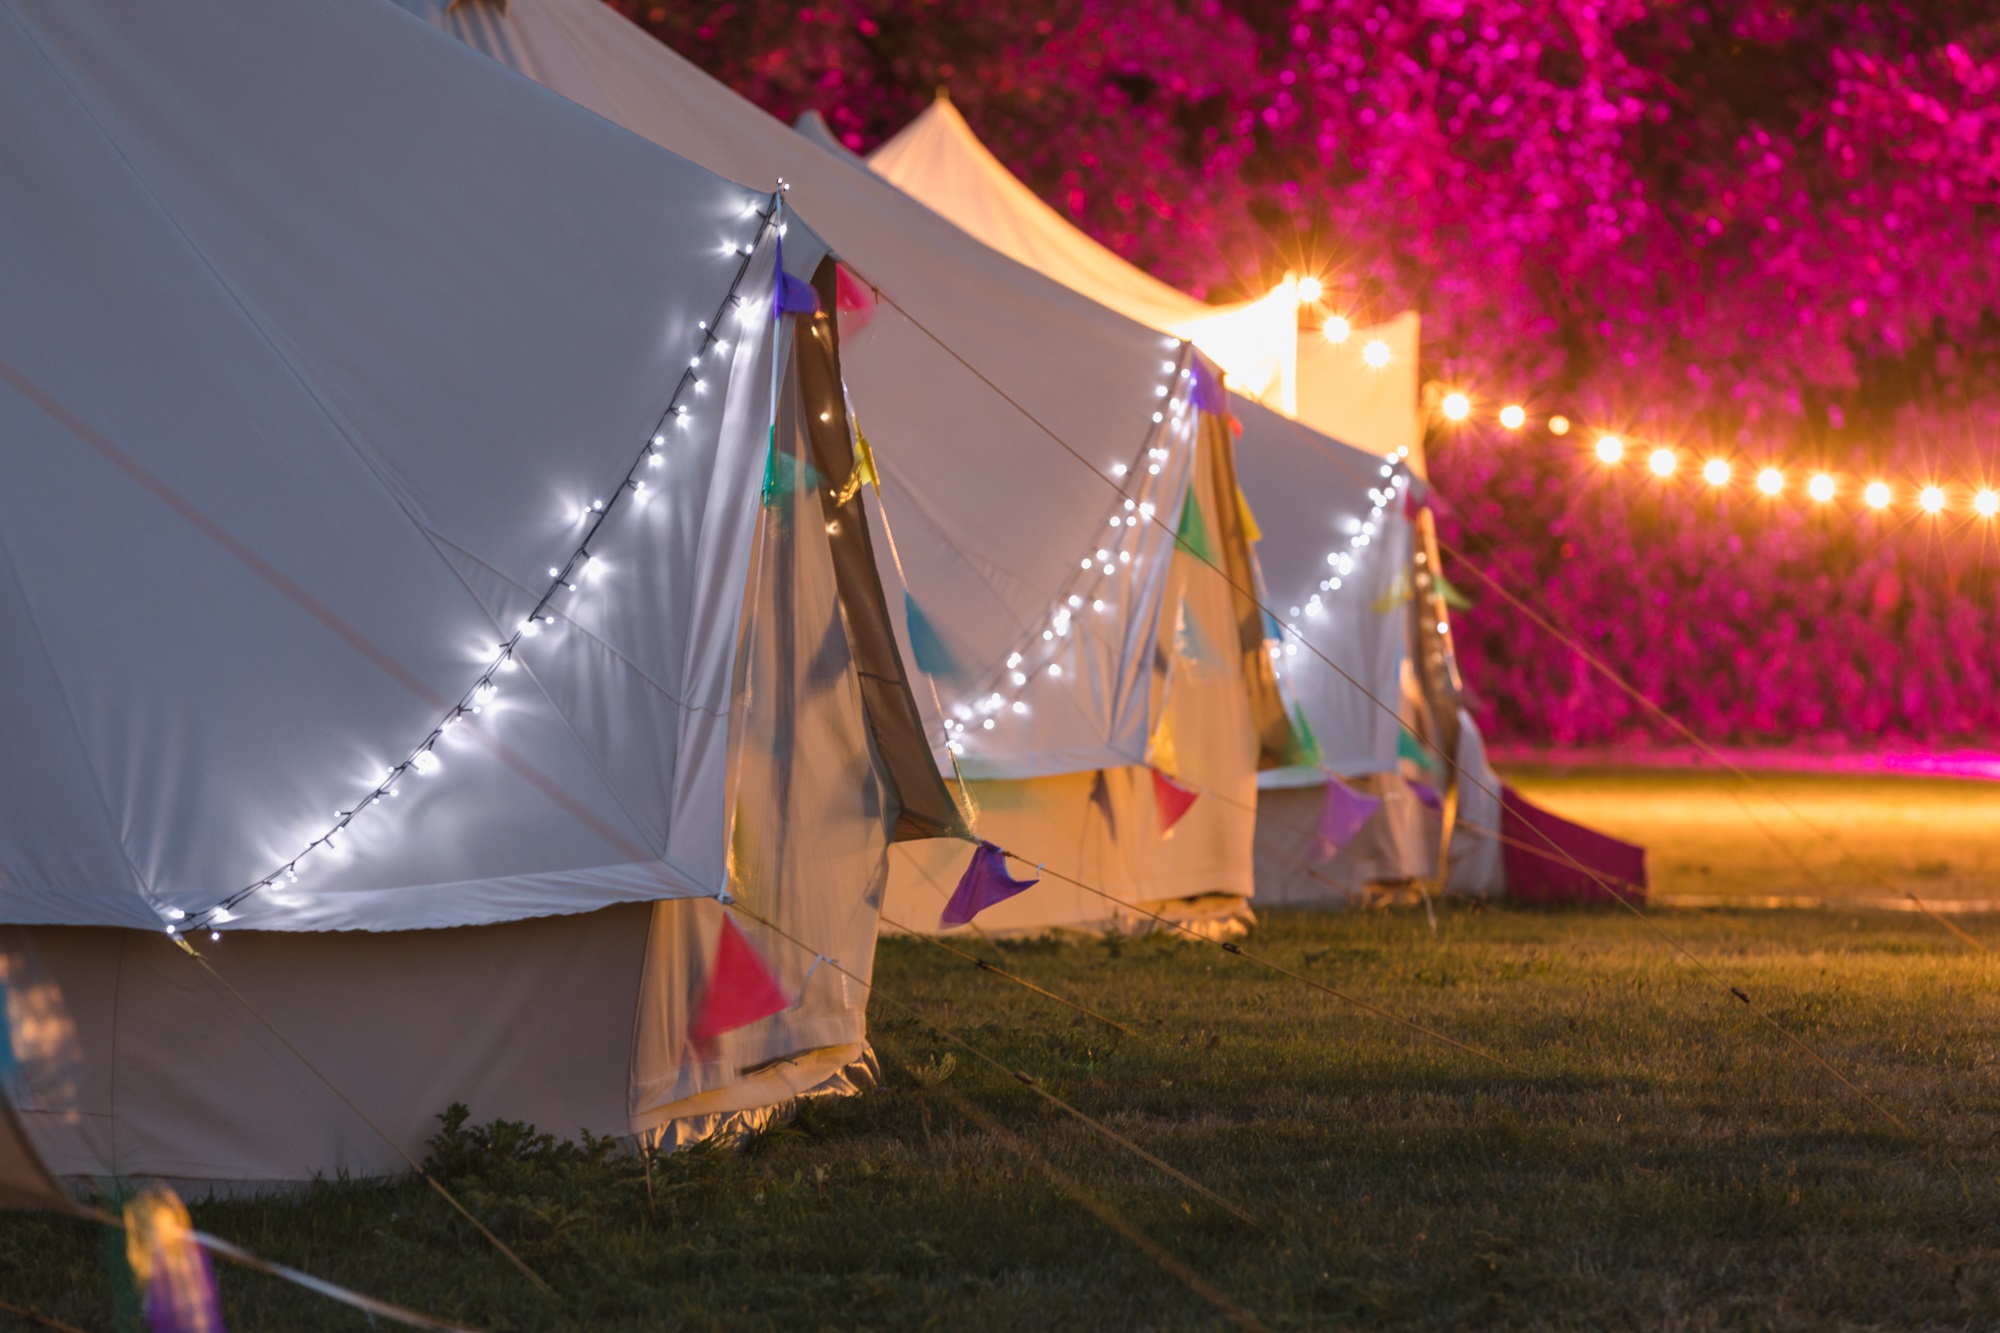 Tent Accommodation